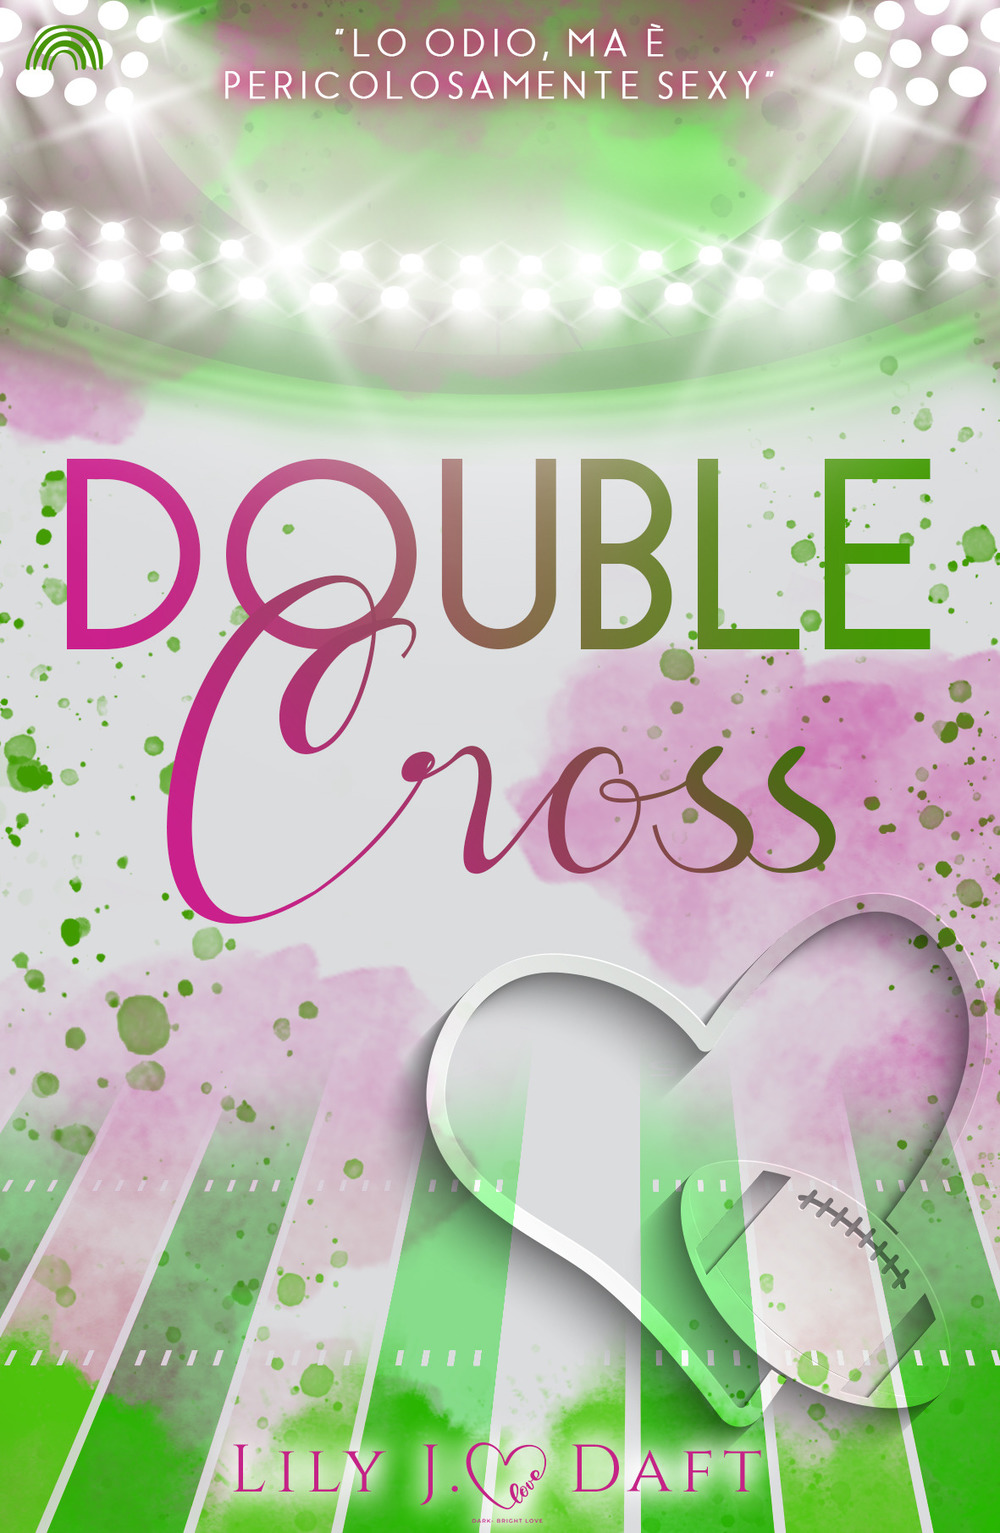 Double cross